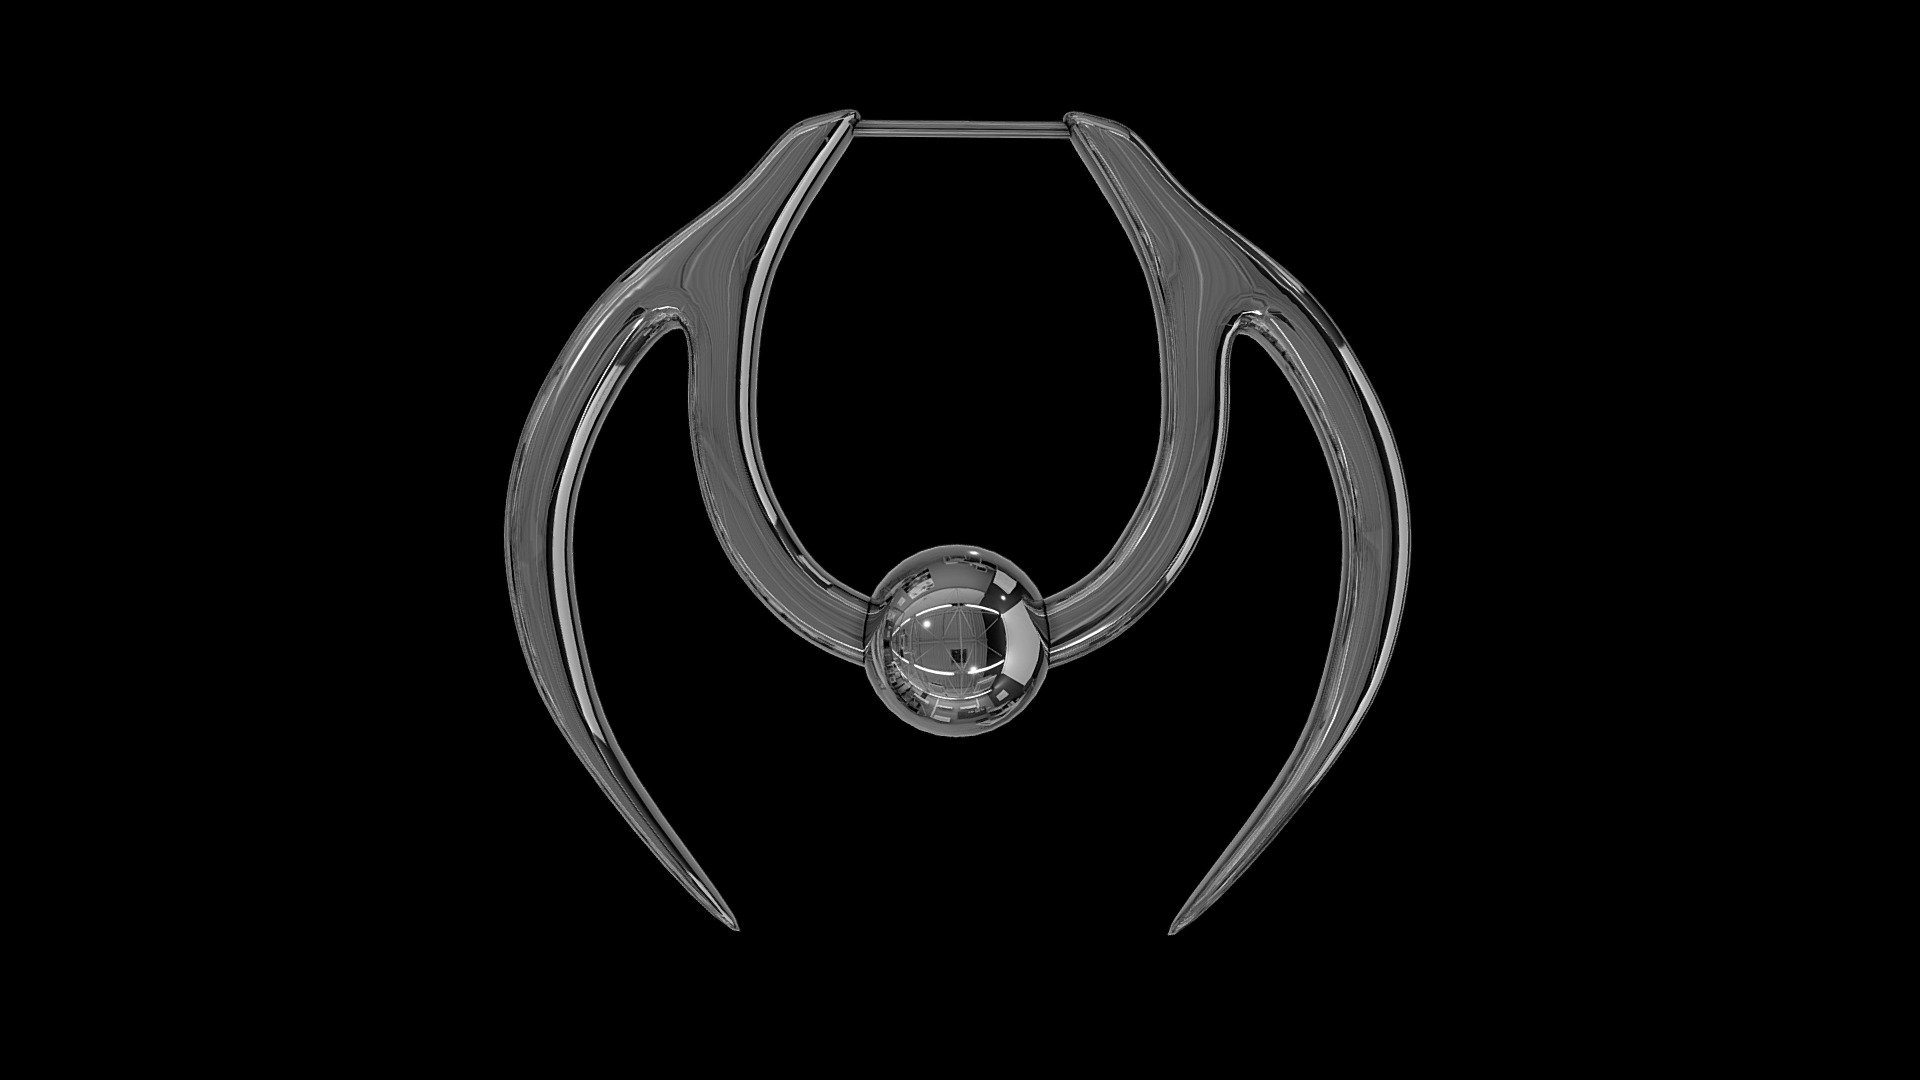 tribal esque ring / hoop - Piercing / earring / jewelry - Buy Royalty Free 3D model by 4145K4N 3d model